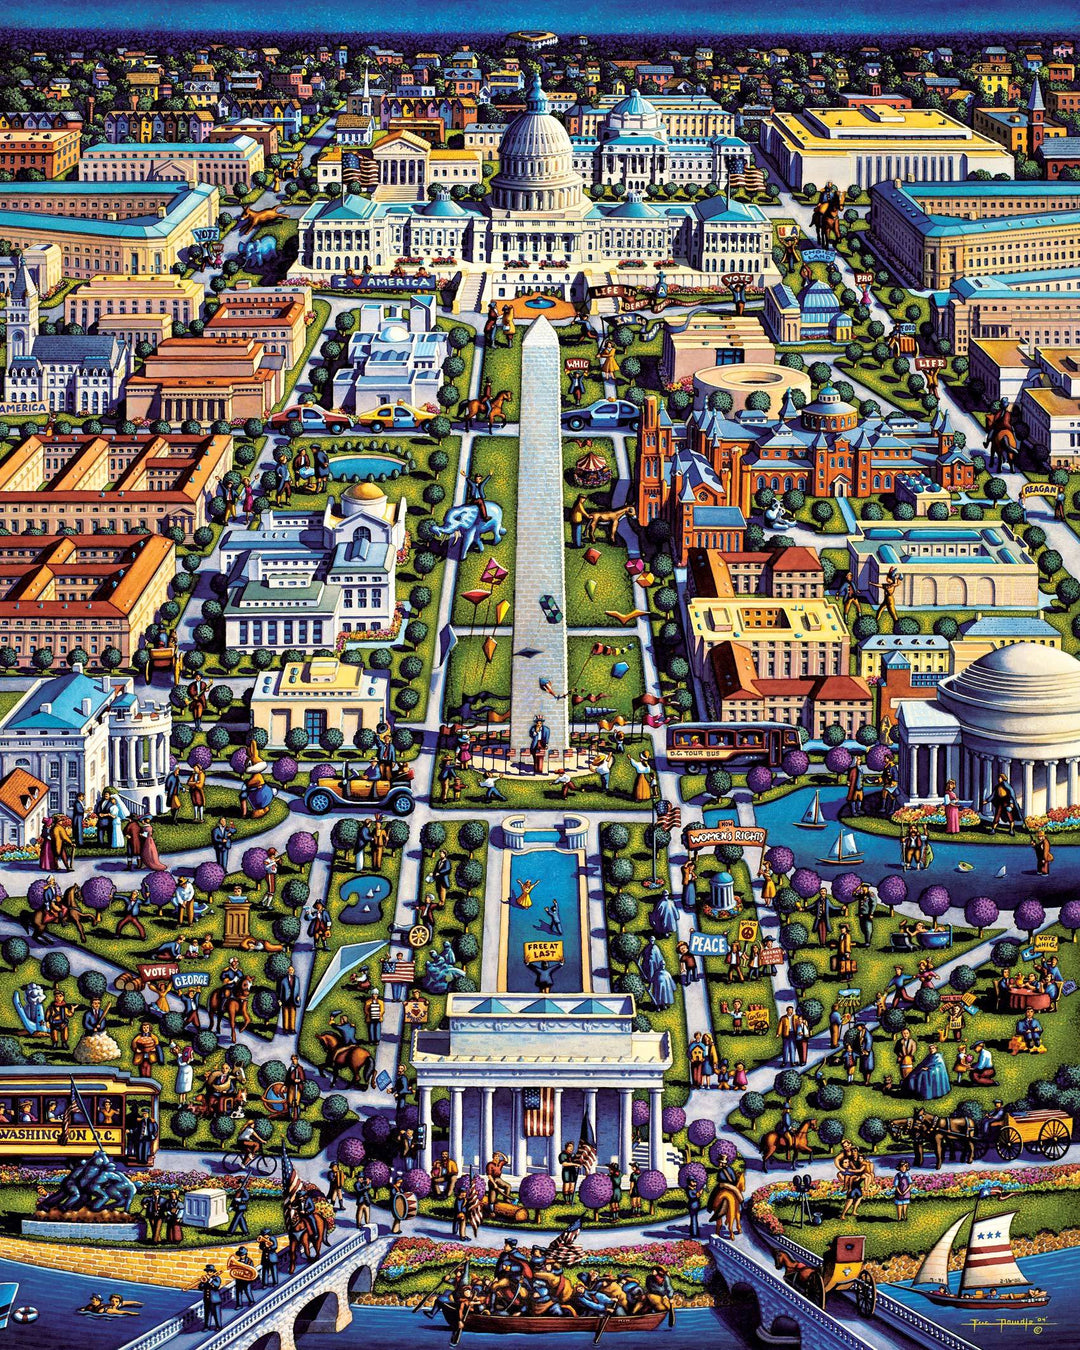 Washington D.C. Poster Print